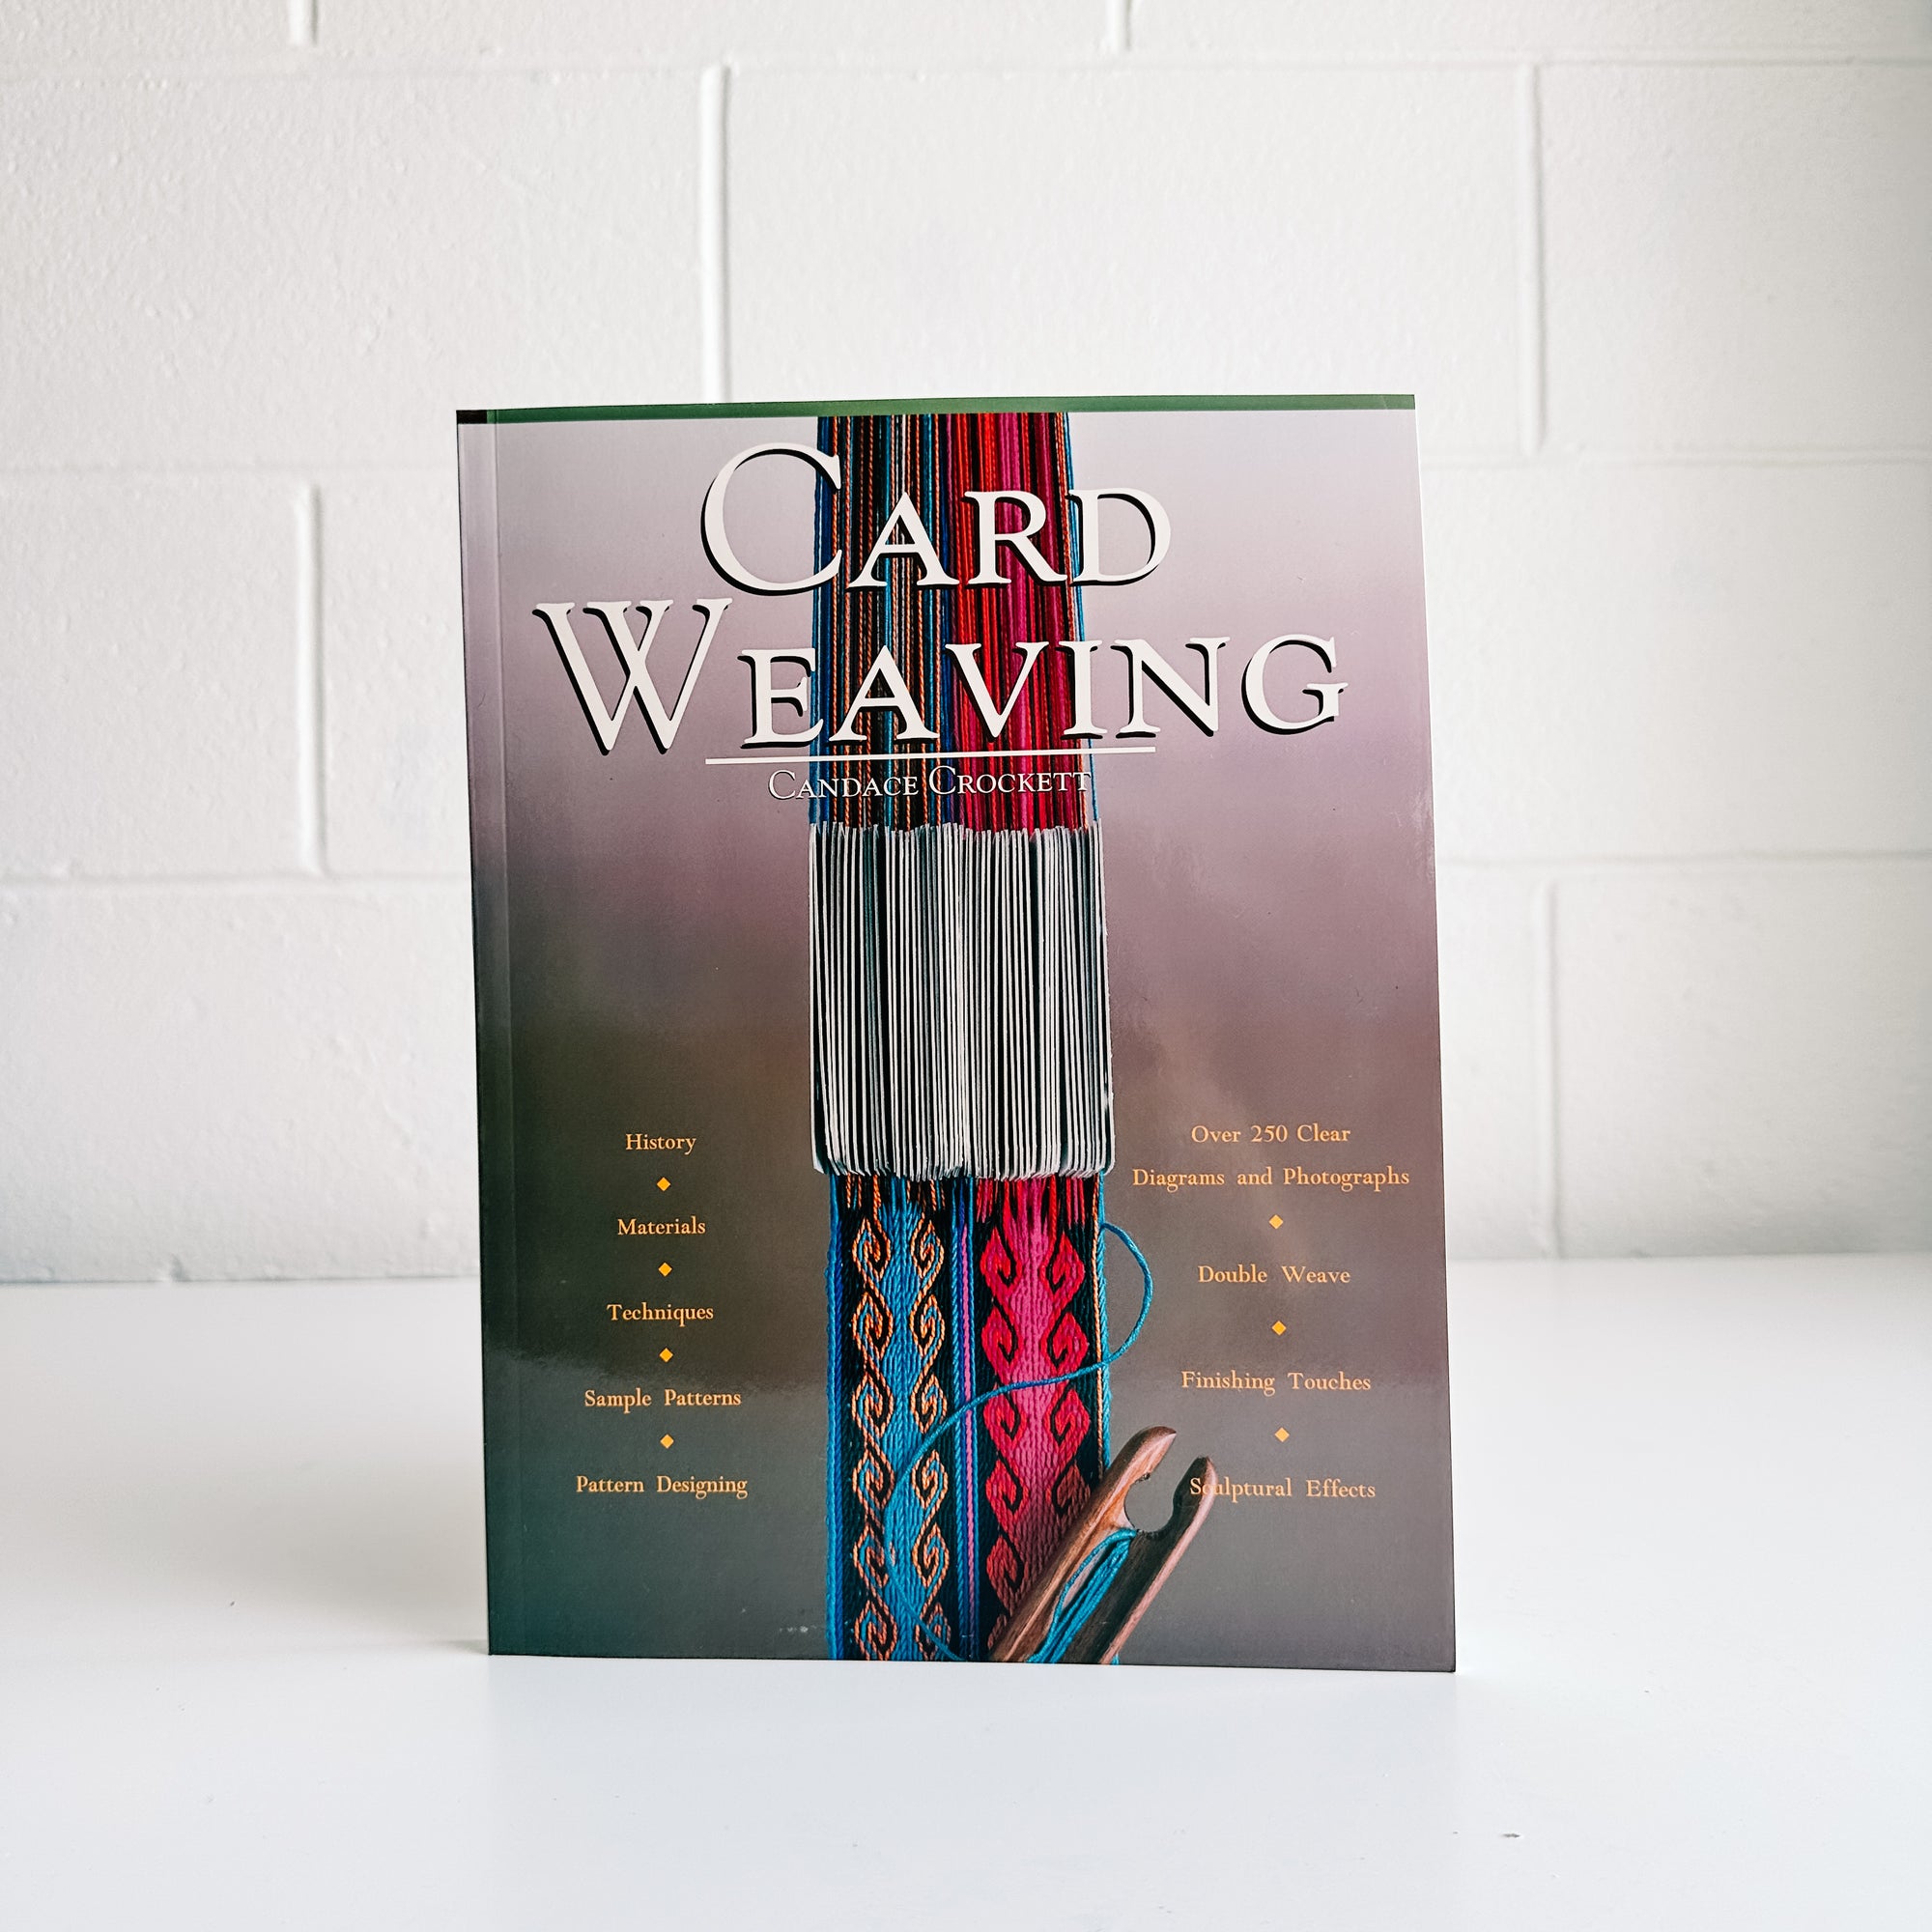 Card Weaving by Candace Crockett